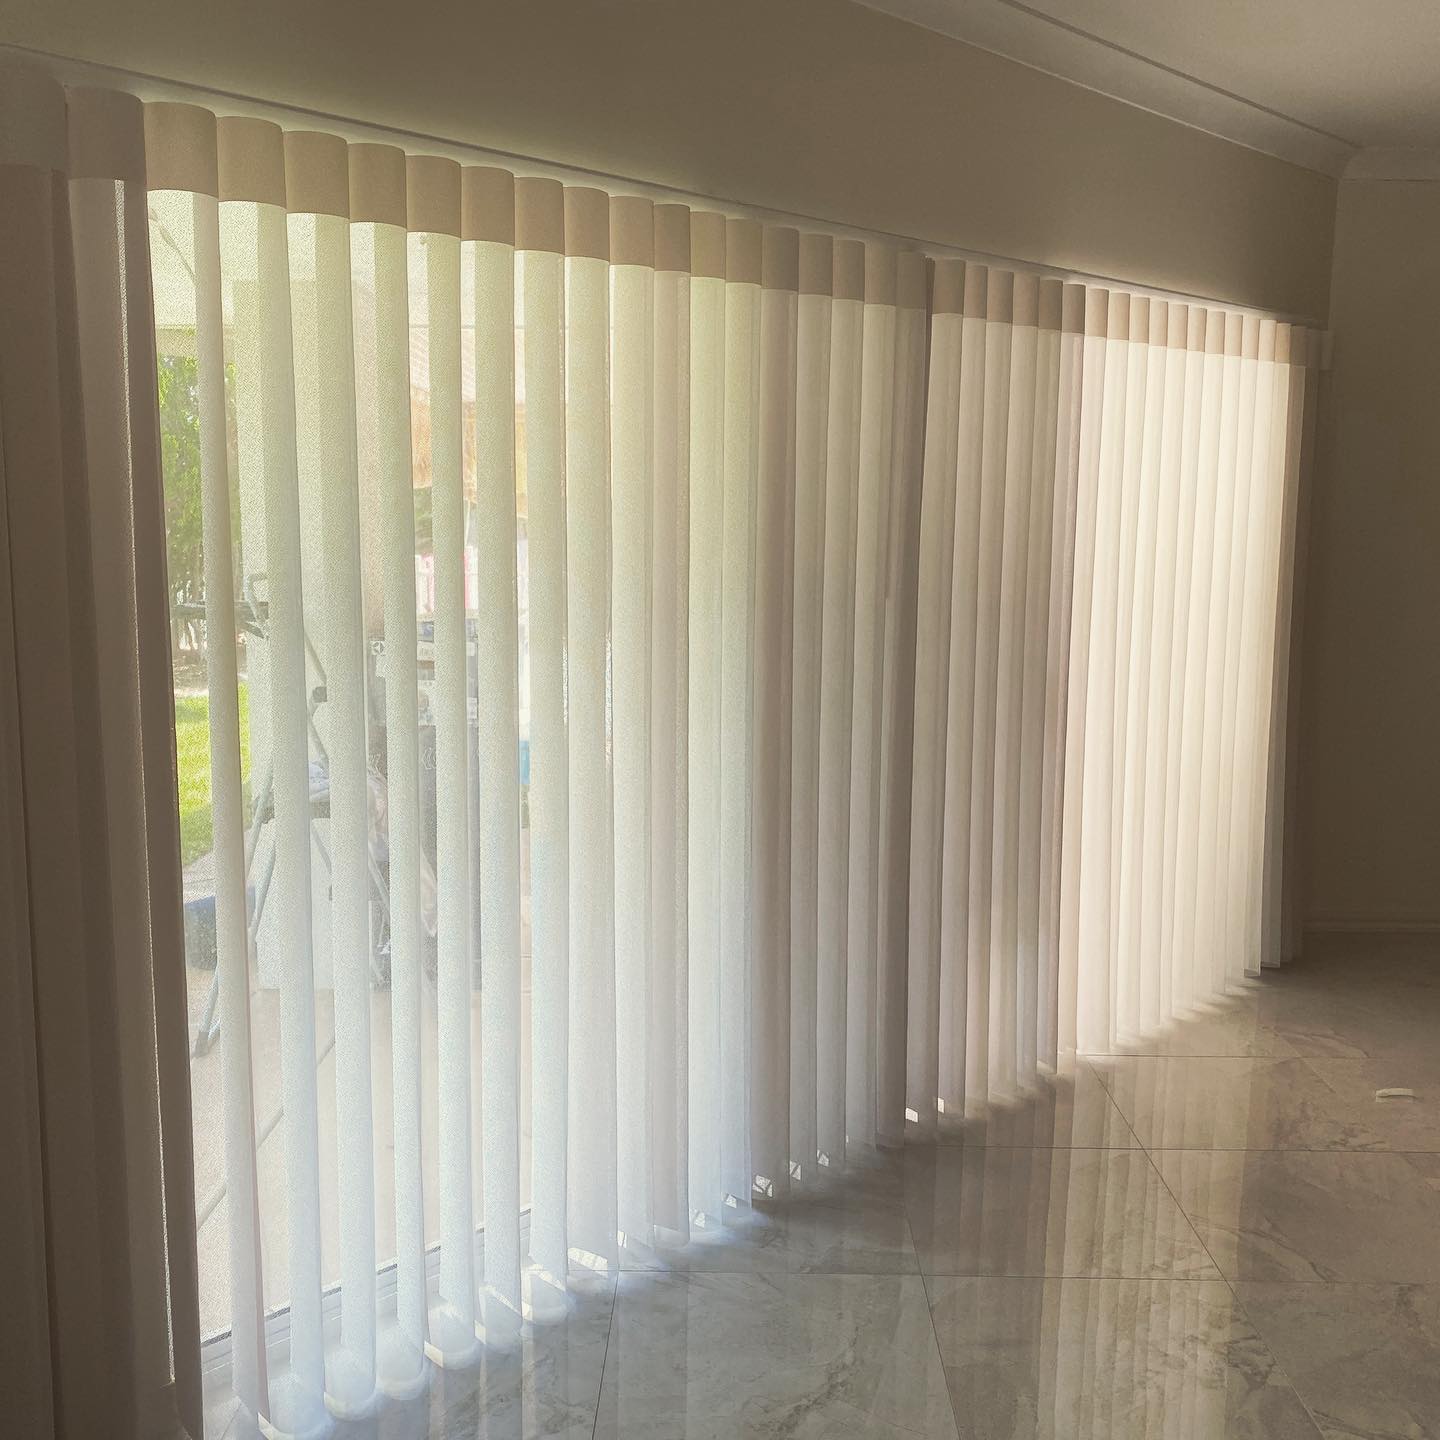 Interior verisahde blinds installed in living room to block light